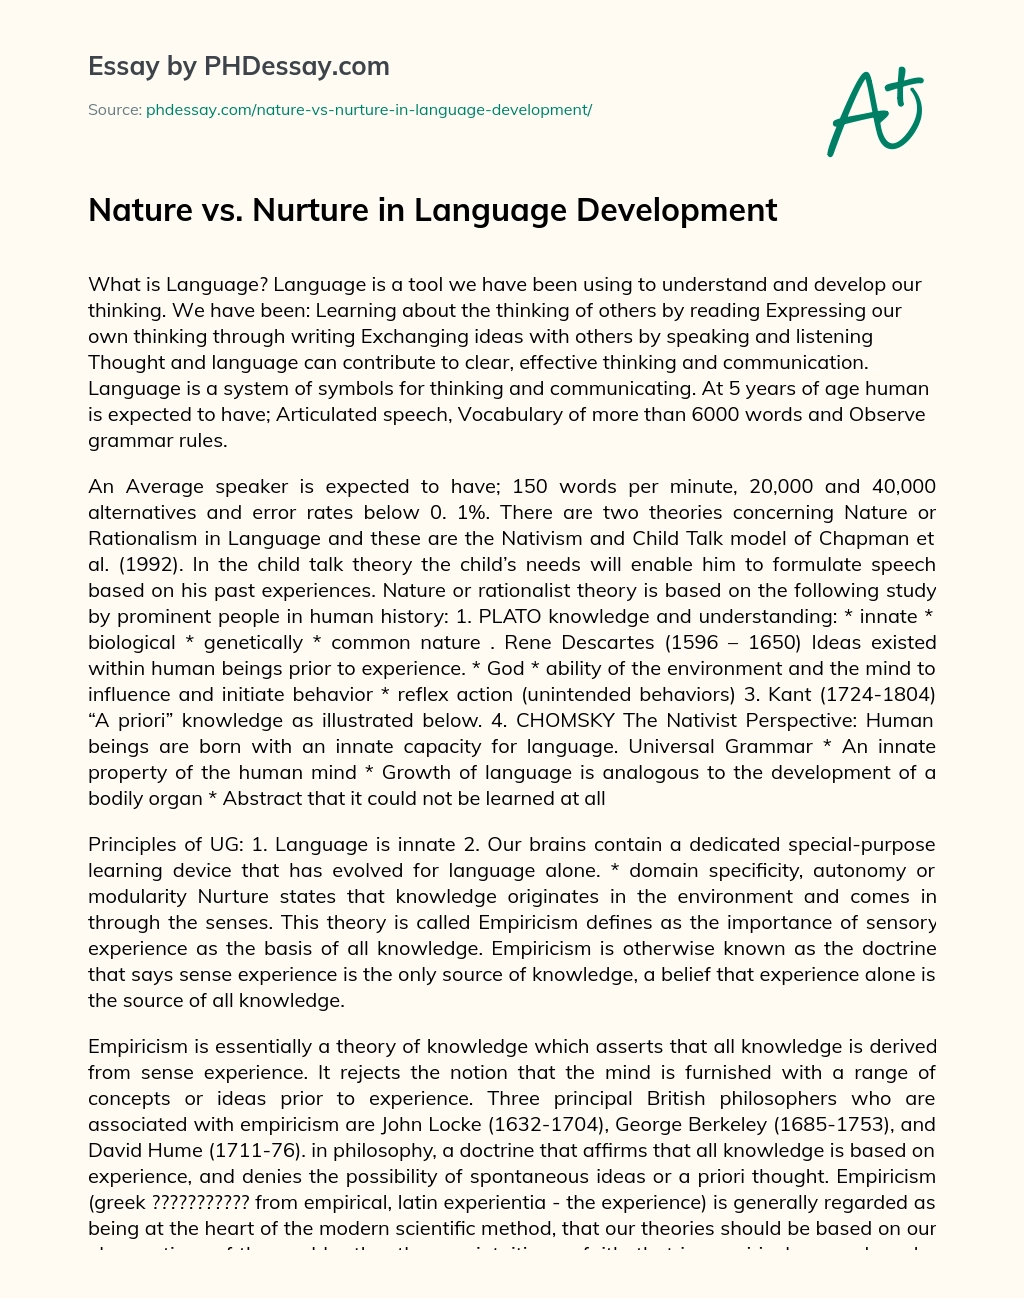 Nature vs. Nurture in Language Development essay